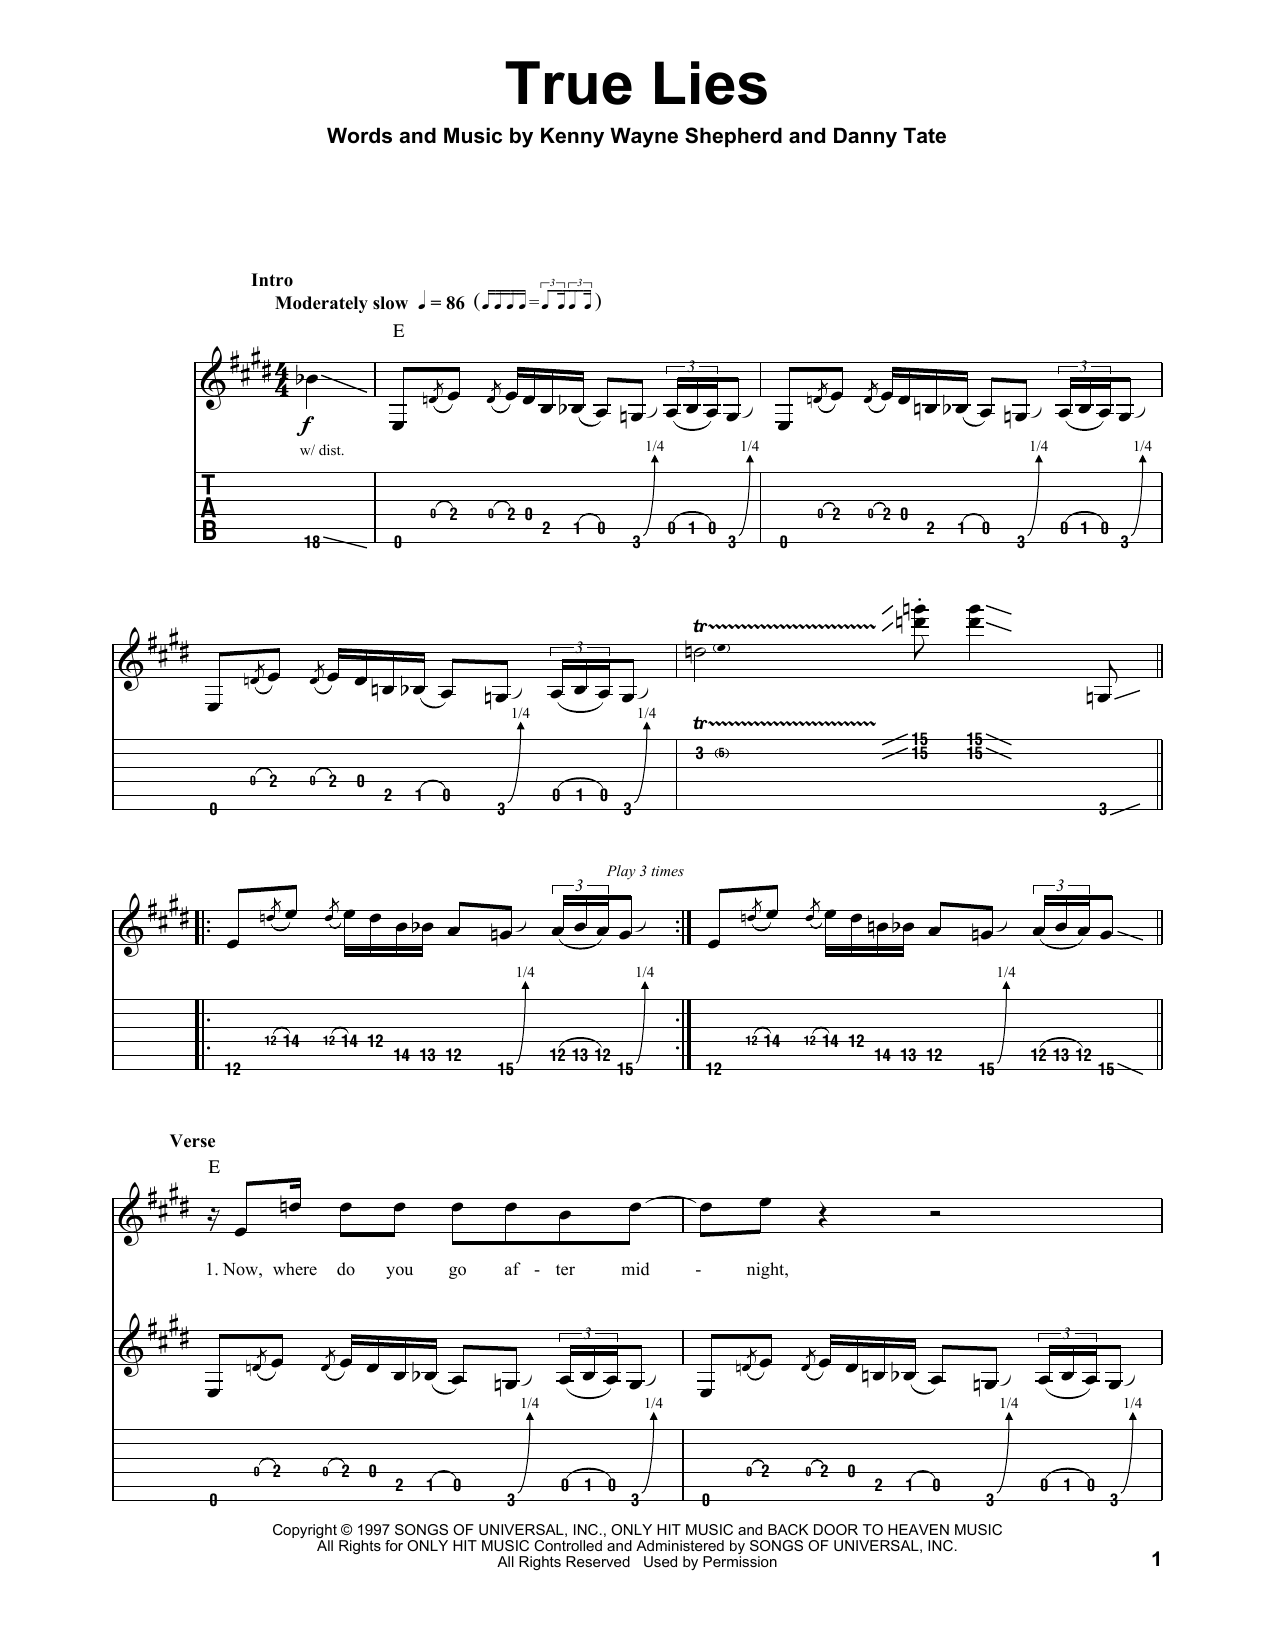 Kenny Wayne Shepherd True Lies Sheet Music Notes & Chords for Guitar Tab Play-Along - Download or Print PDF